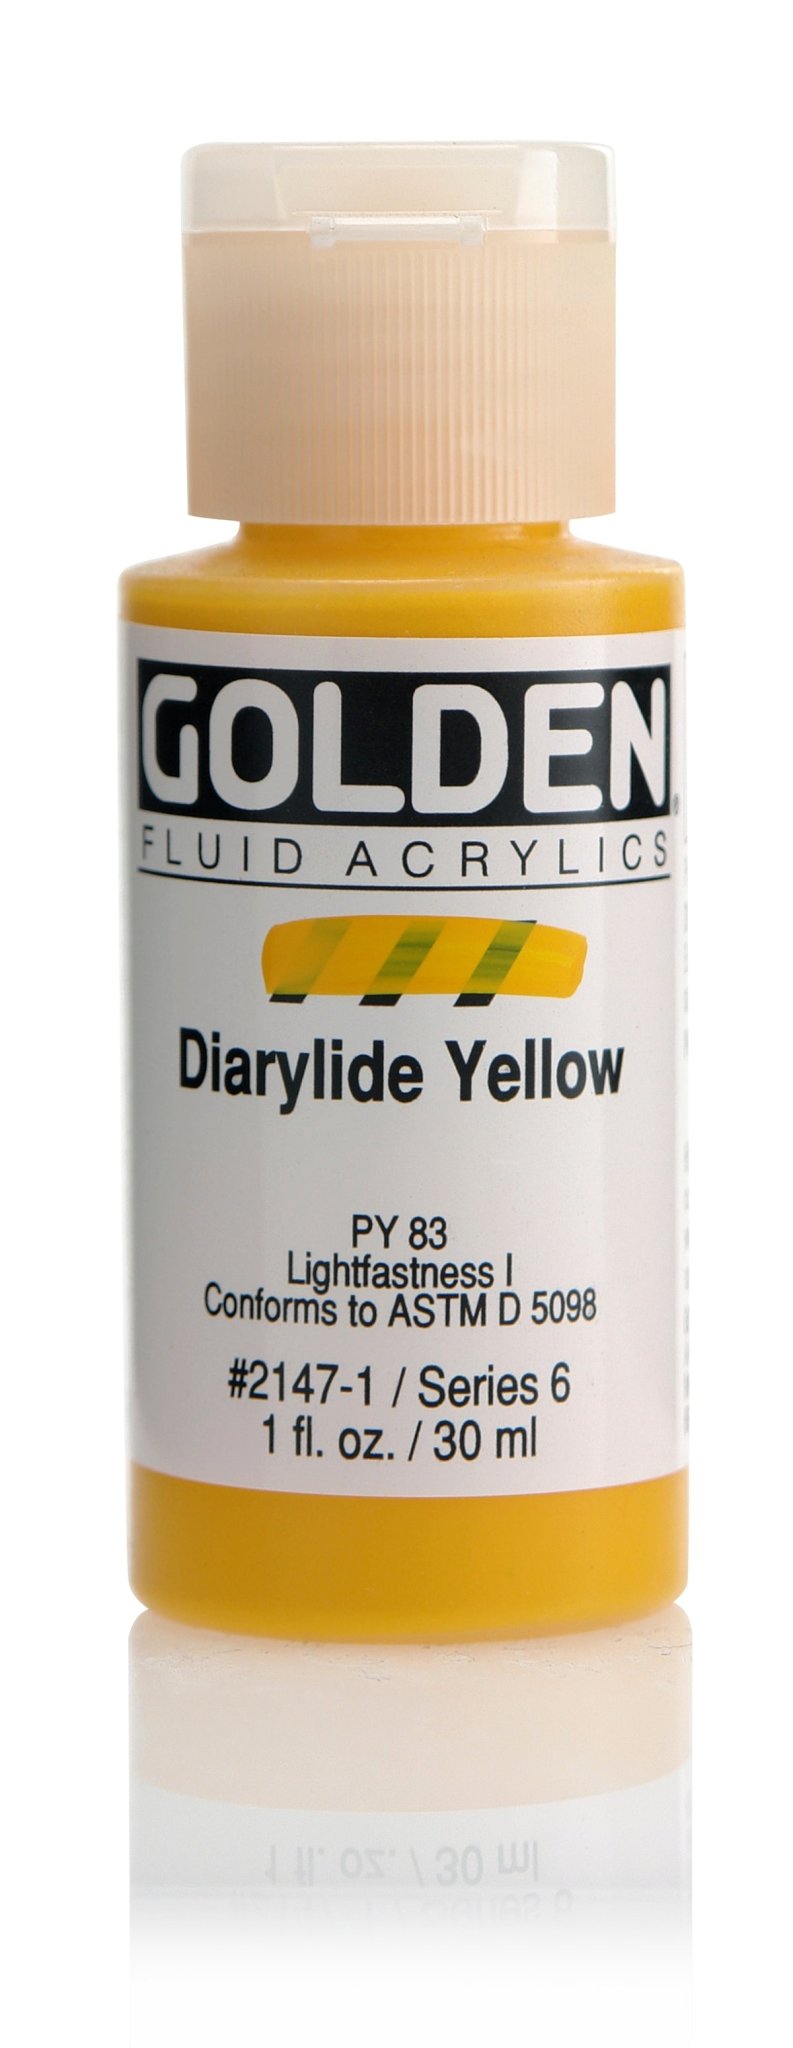 Golden Fluid Acrylic 30ml Diarylide Yellow - theartshop.com.au